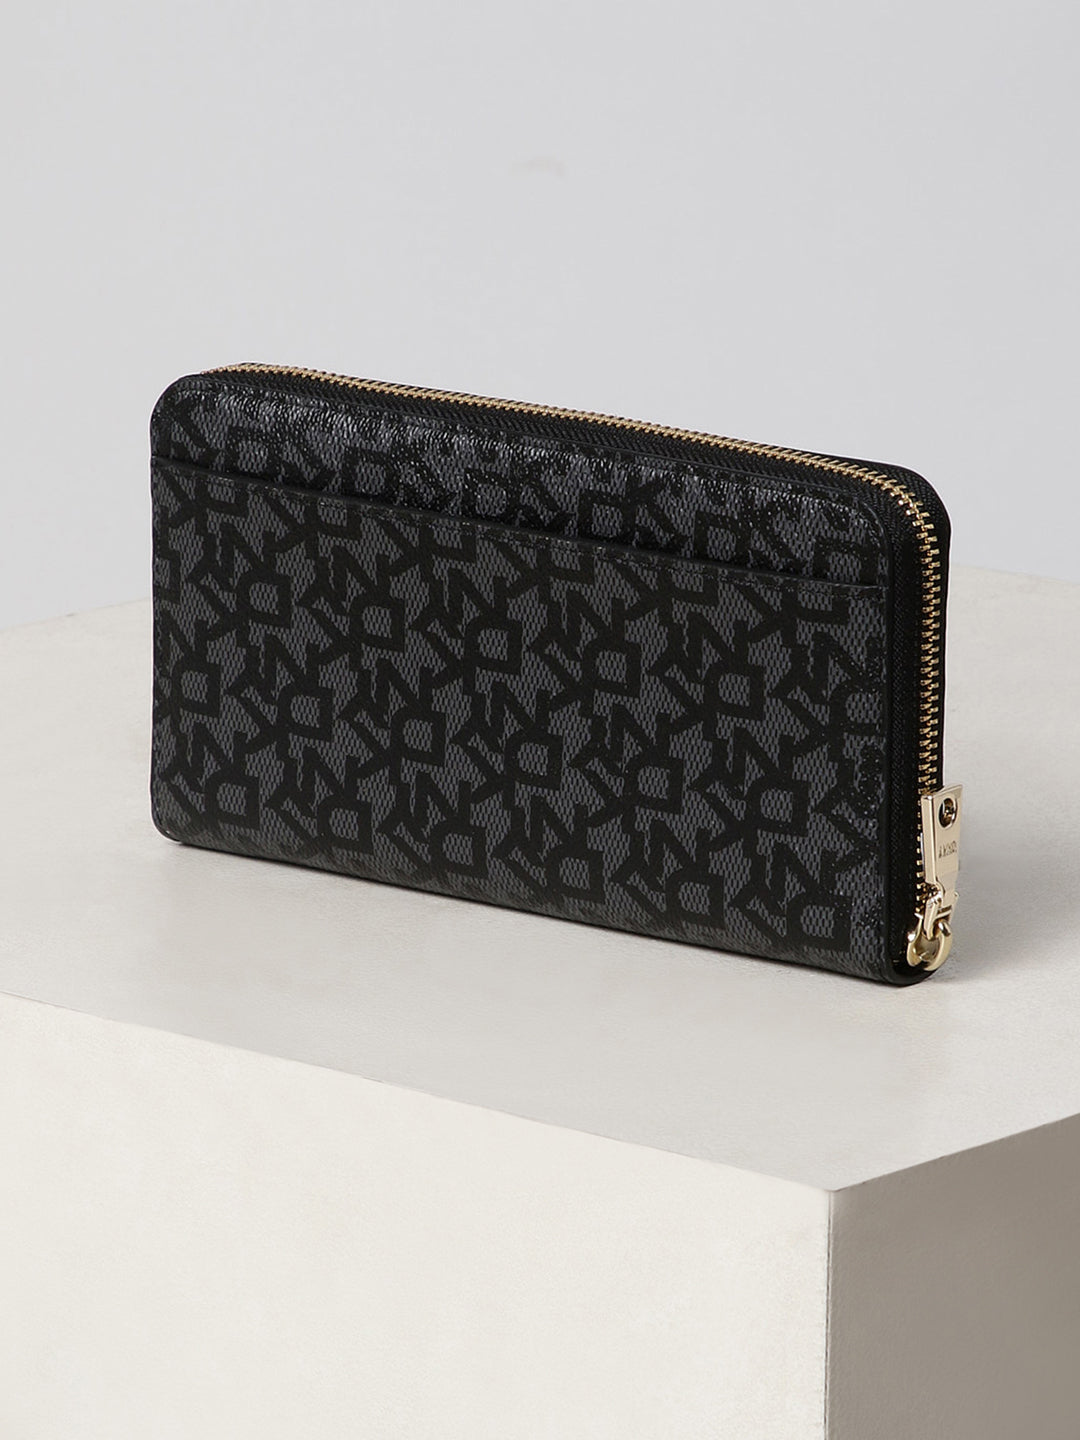 DKNY Purse Wallet Envelope Faux Leather Coin Pouch Black White Zip Wrist  Strap | eBay